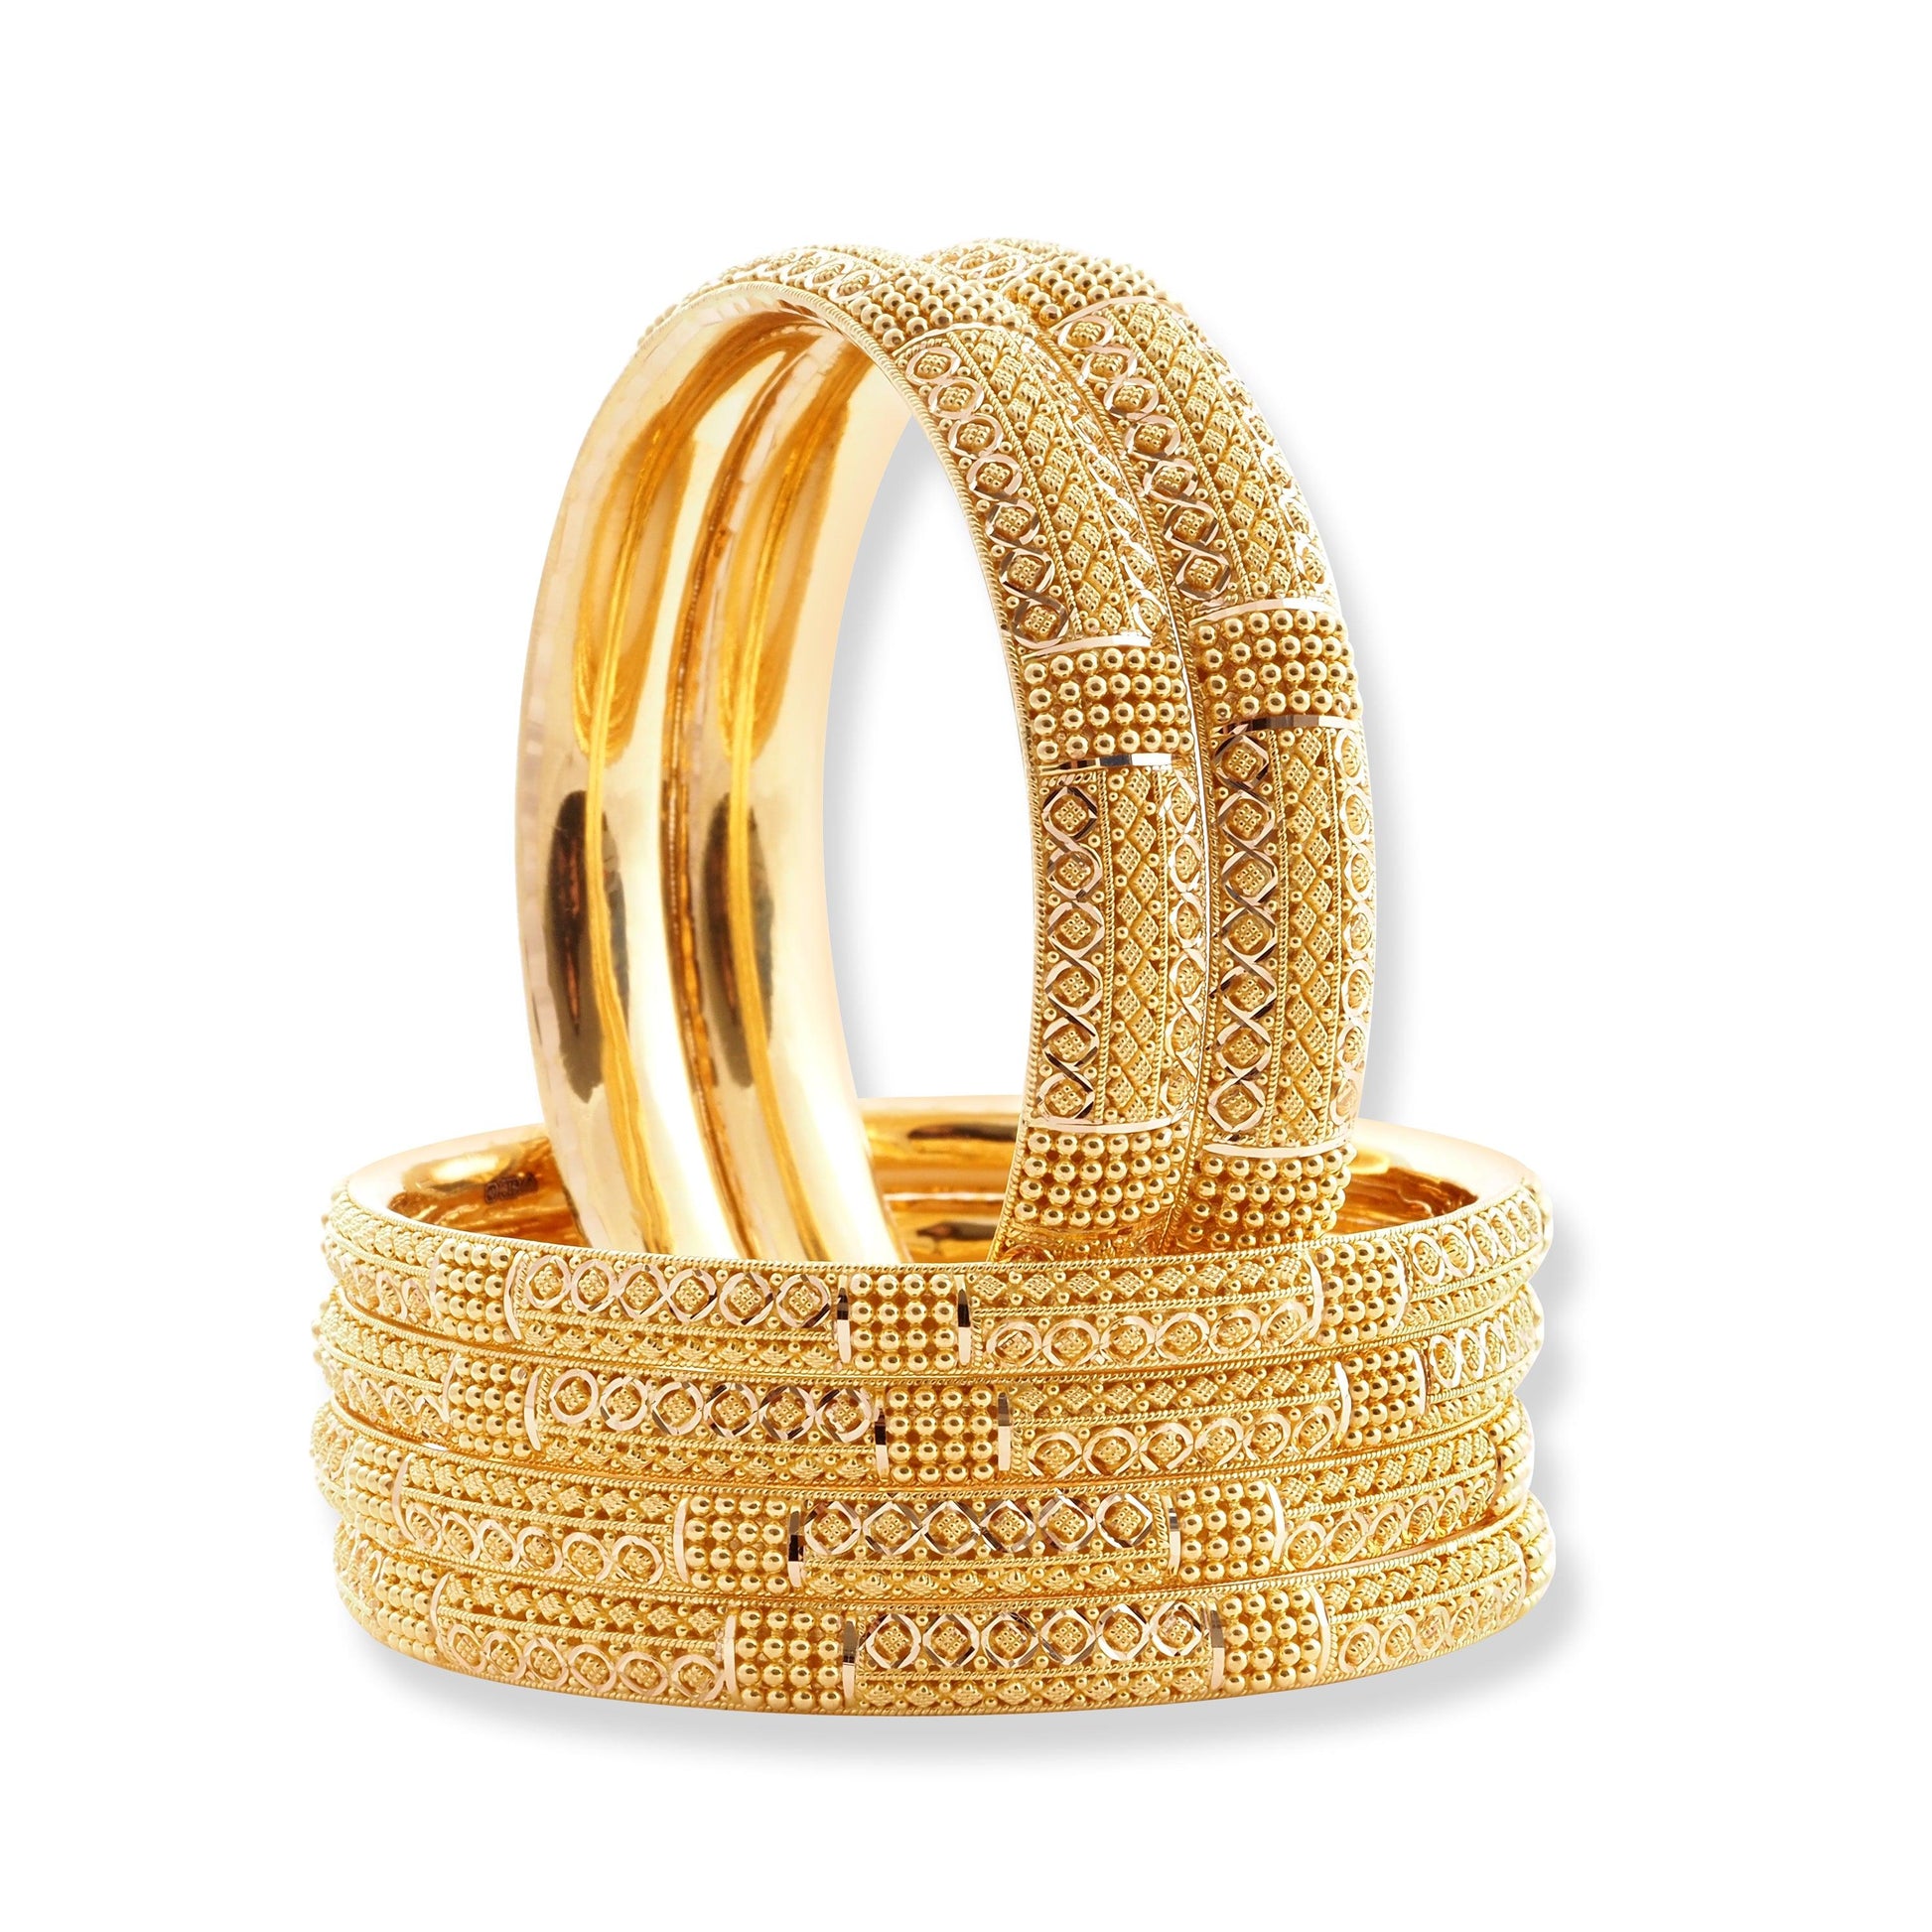 Set of Six 22ct Gold Bangles with Diamond Cut Bead Design and Filigree Work B-8571 - Minar Jewellers